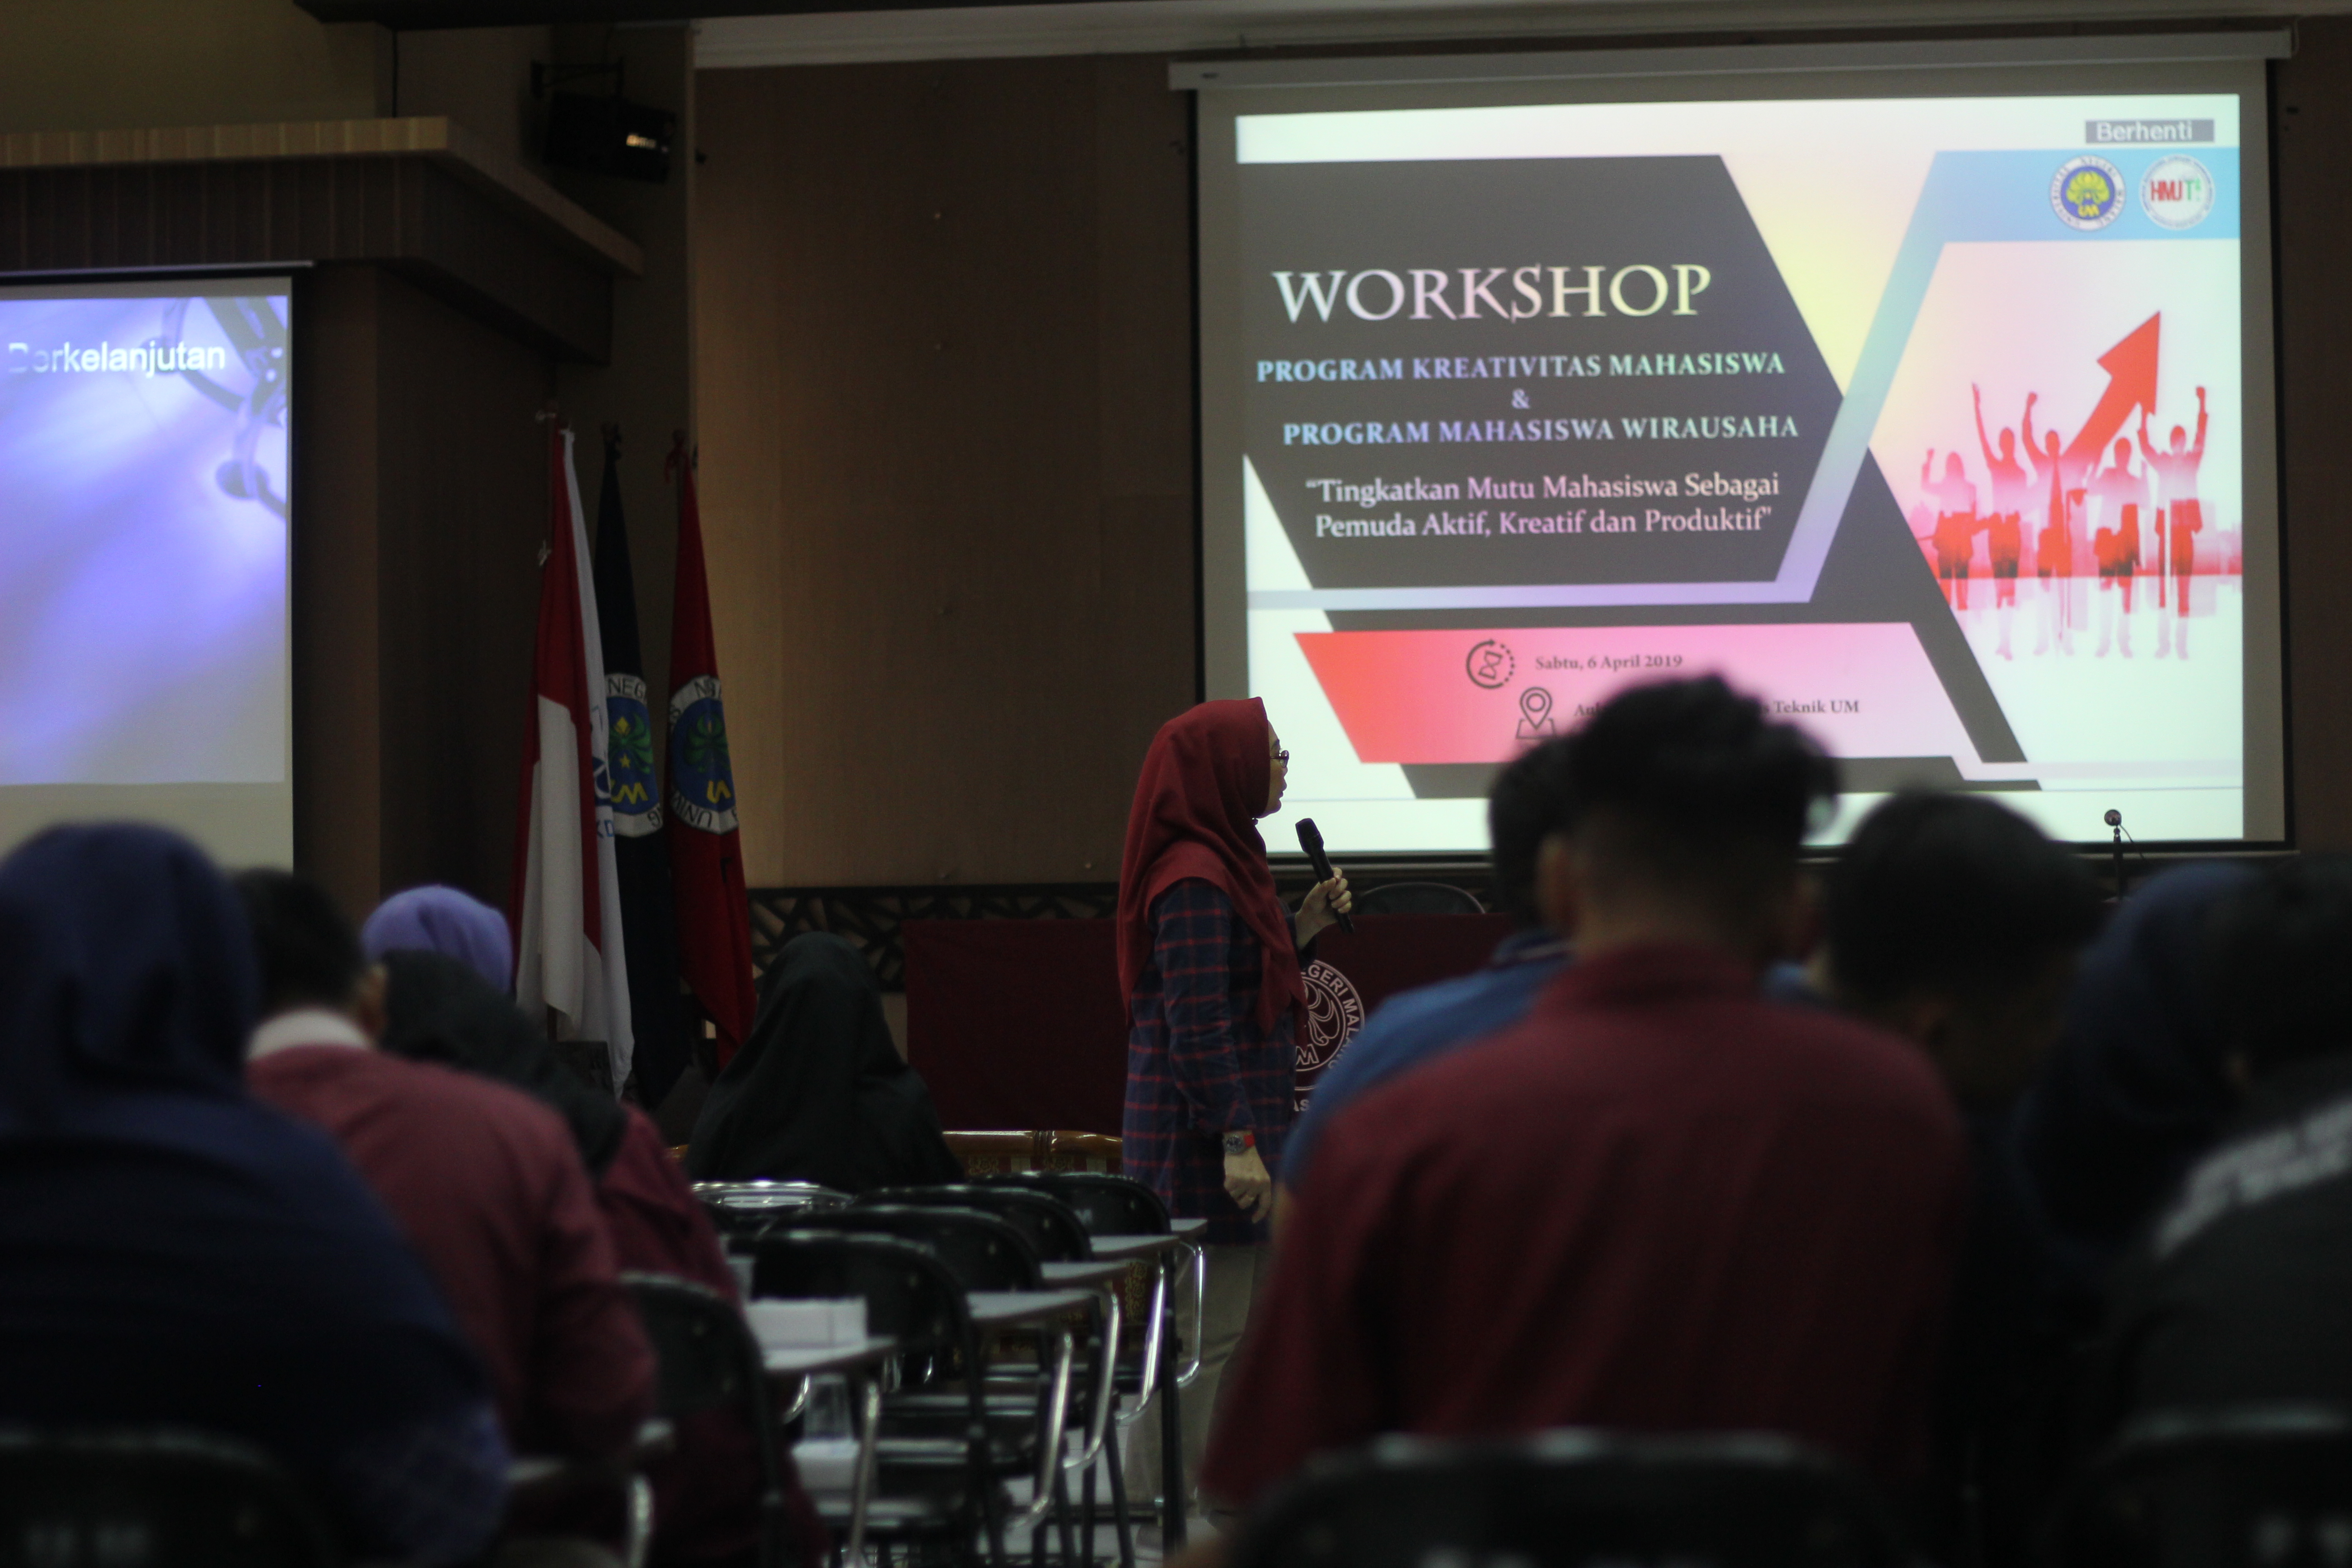 Workshop Program Mahasiswa Wirausaha (PMW) Jurusan Teknologi Industri Tahun 2019